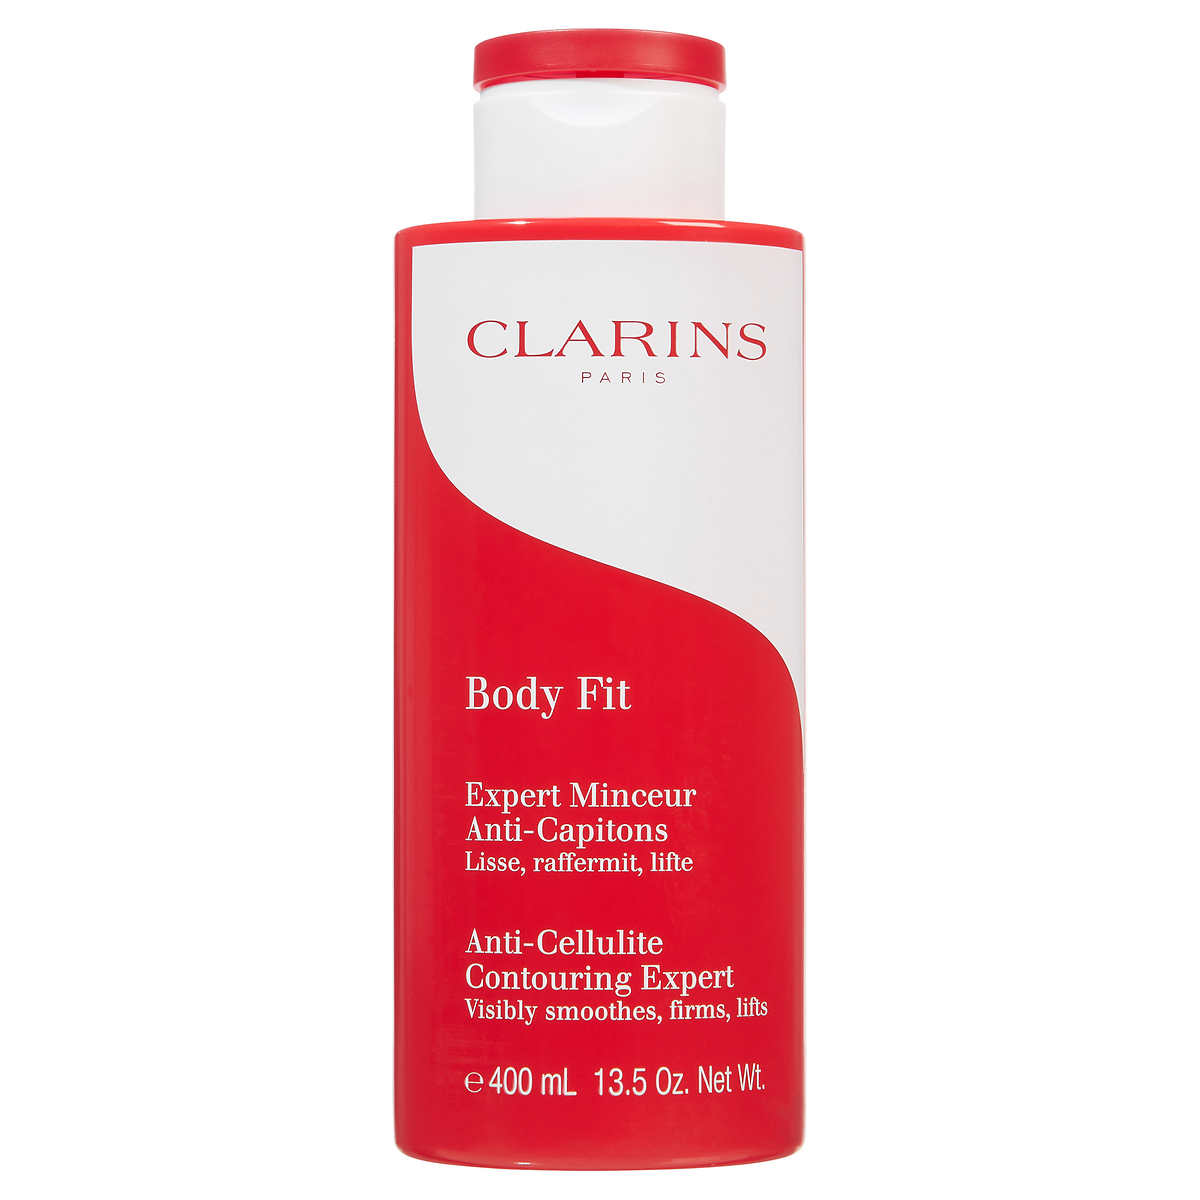 Clarins - Body Fit Anti-Cellulite Contouring Expert 200ml/6.9oz